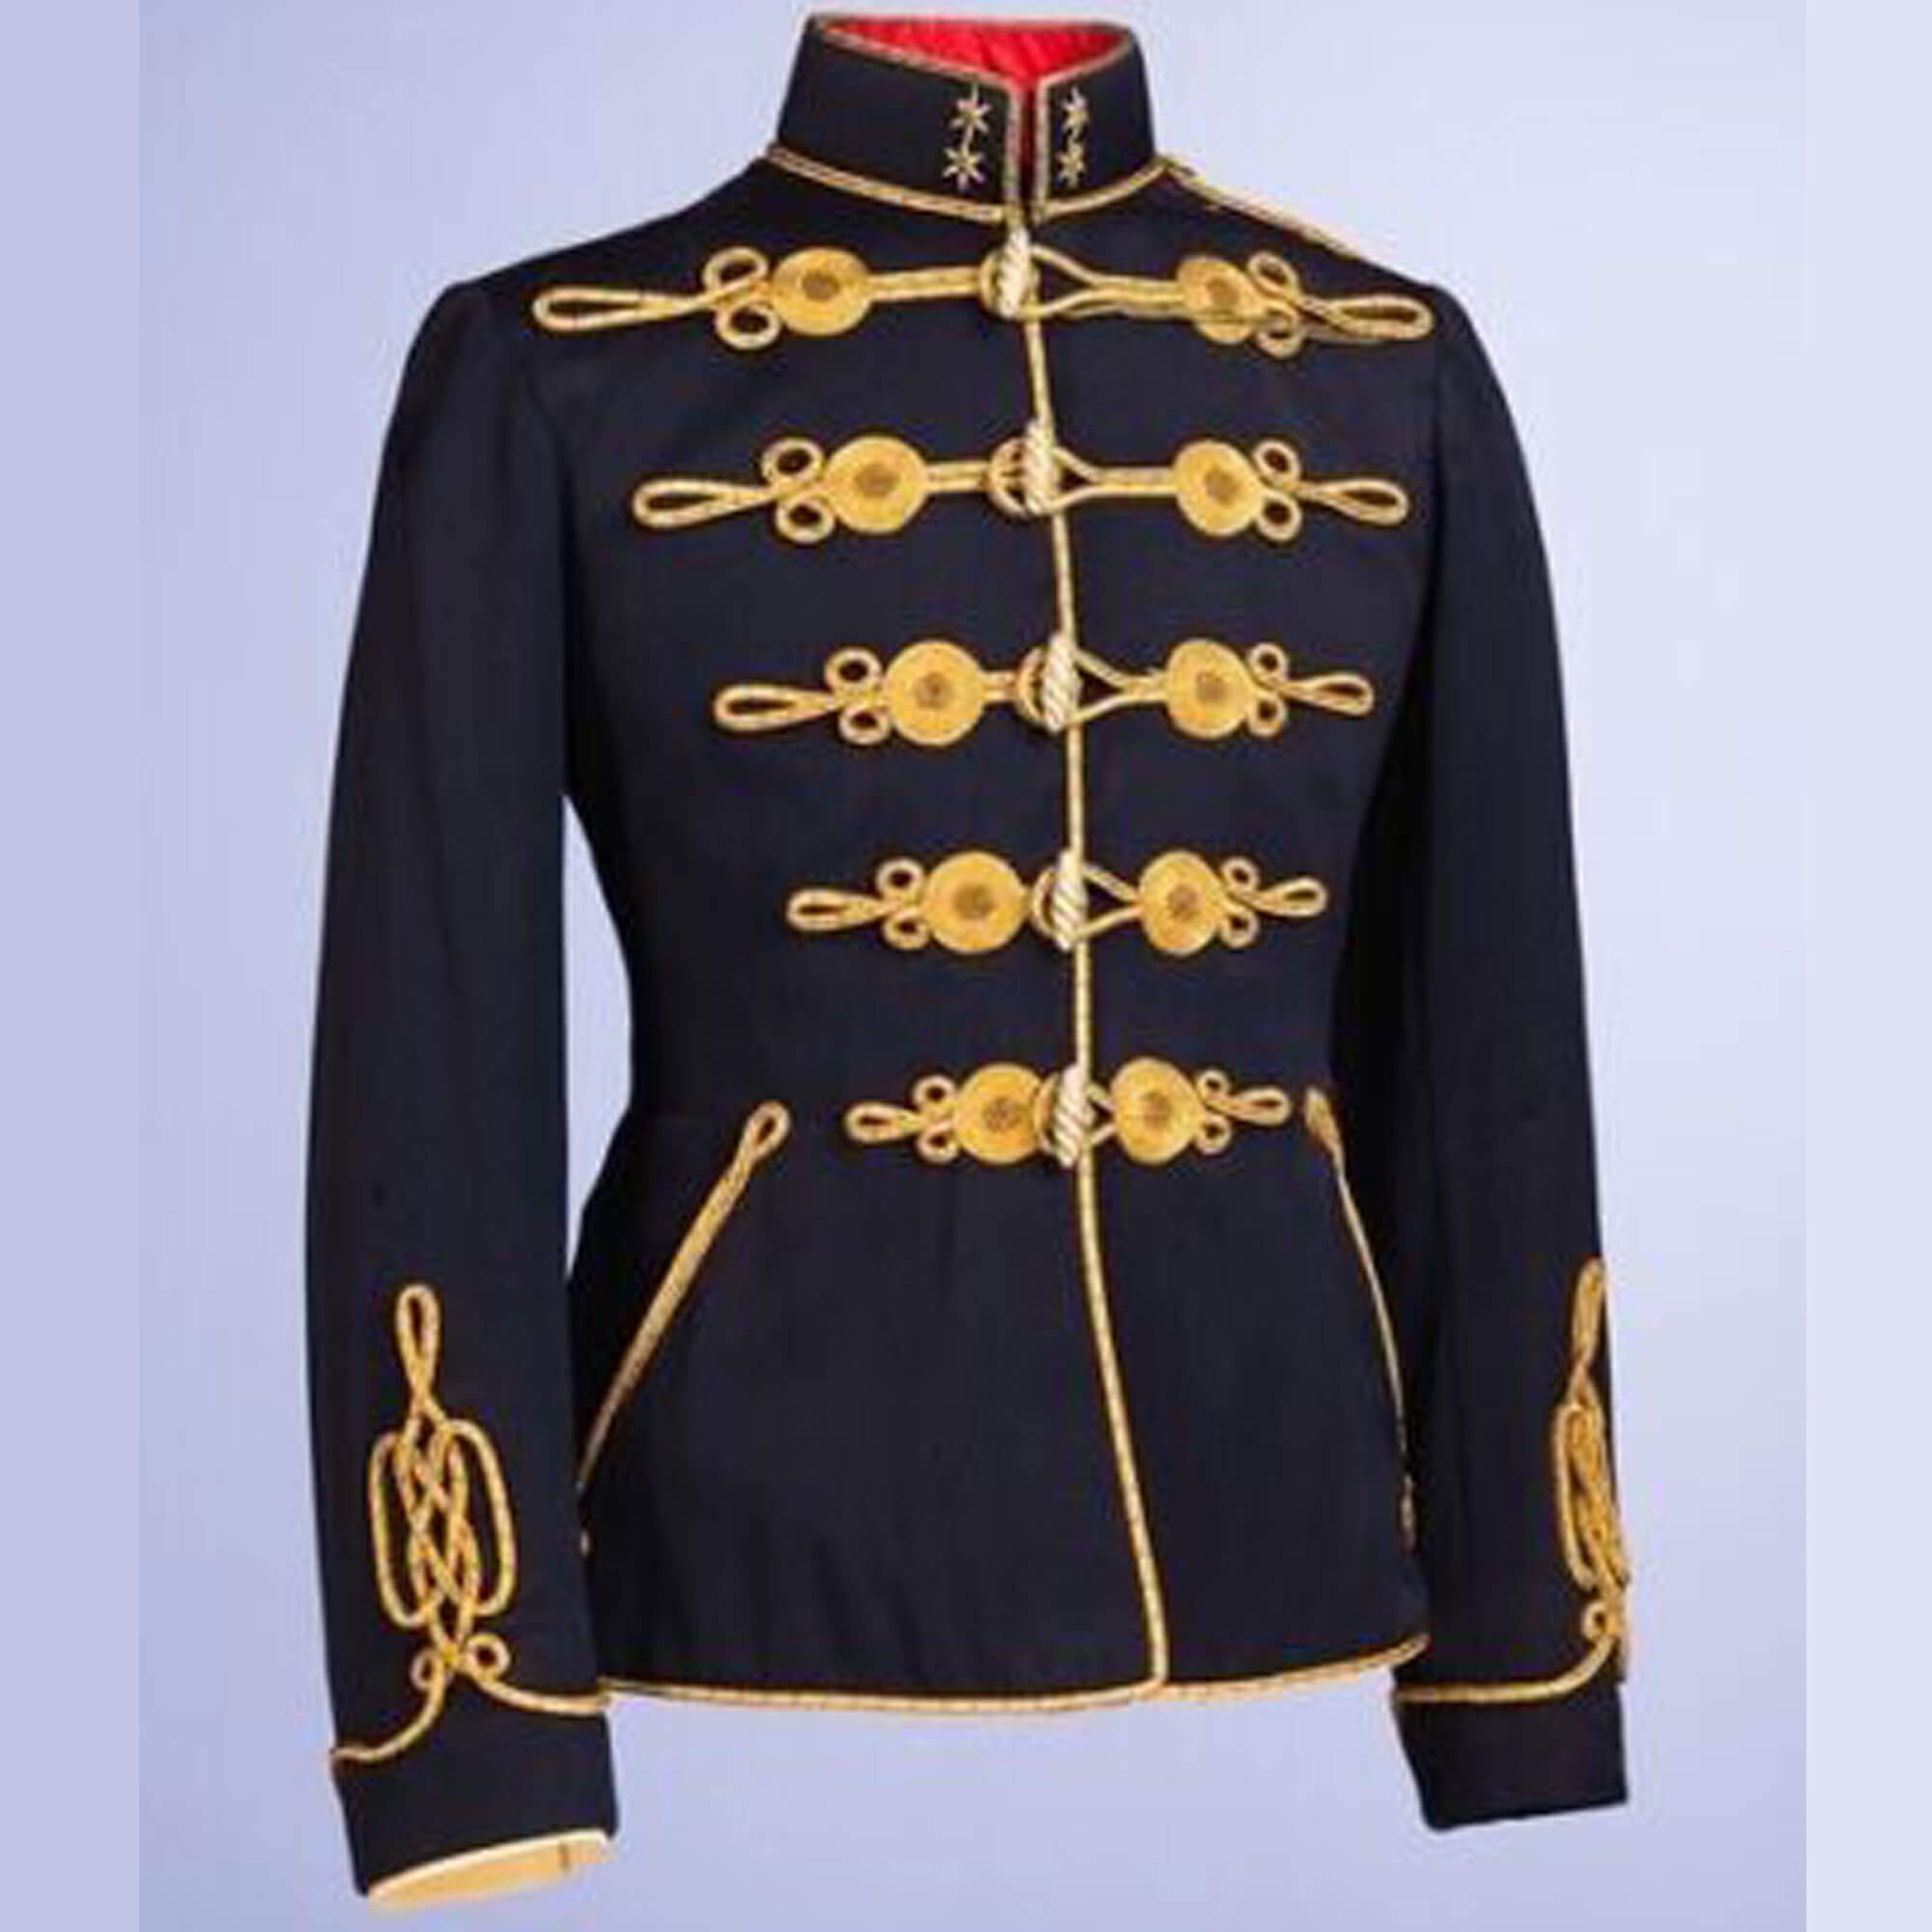 New Regiment's House Corps Attilor Uniform For Officer Wool Jacket